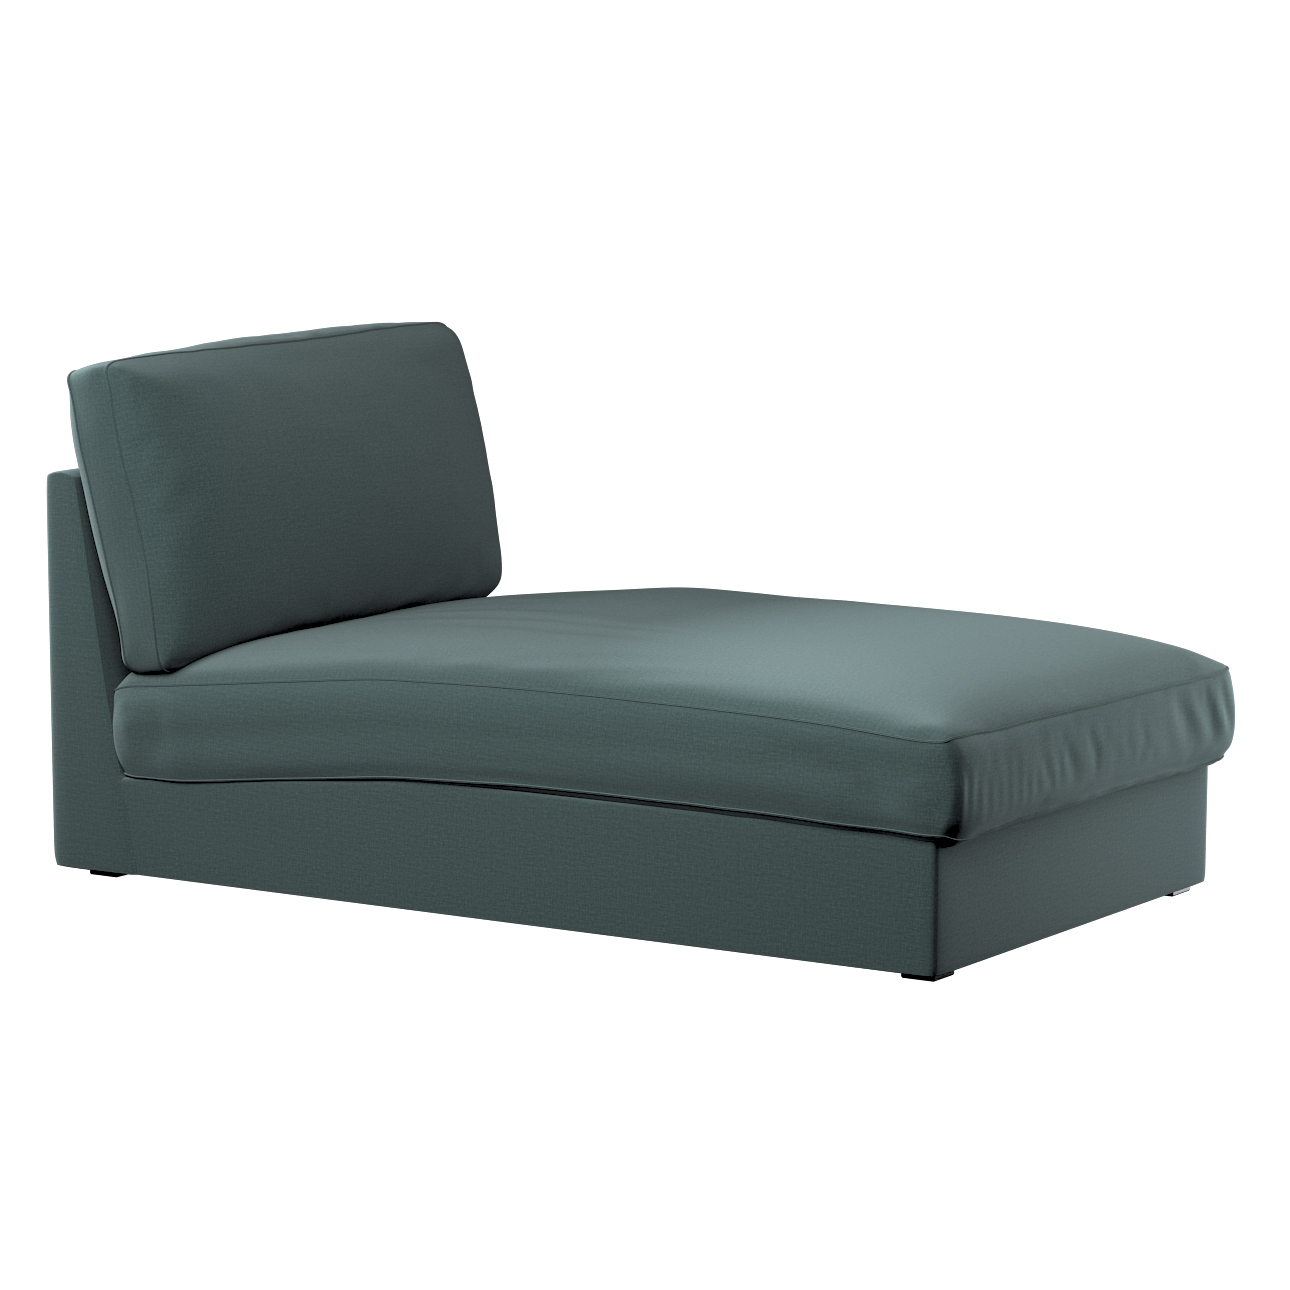 Bezug für Kivik Recamiere Sofa, smaragdgrün, Bezug für Kivik Recamiere, Ing günstig online kaufen